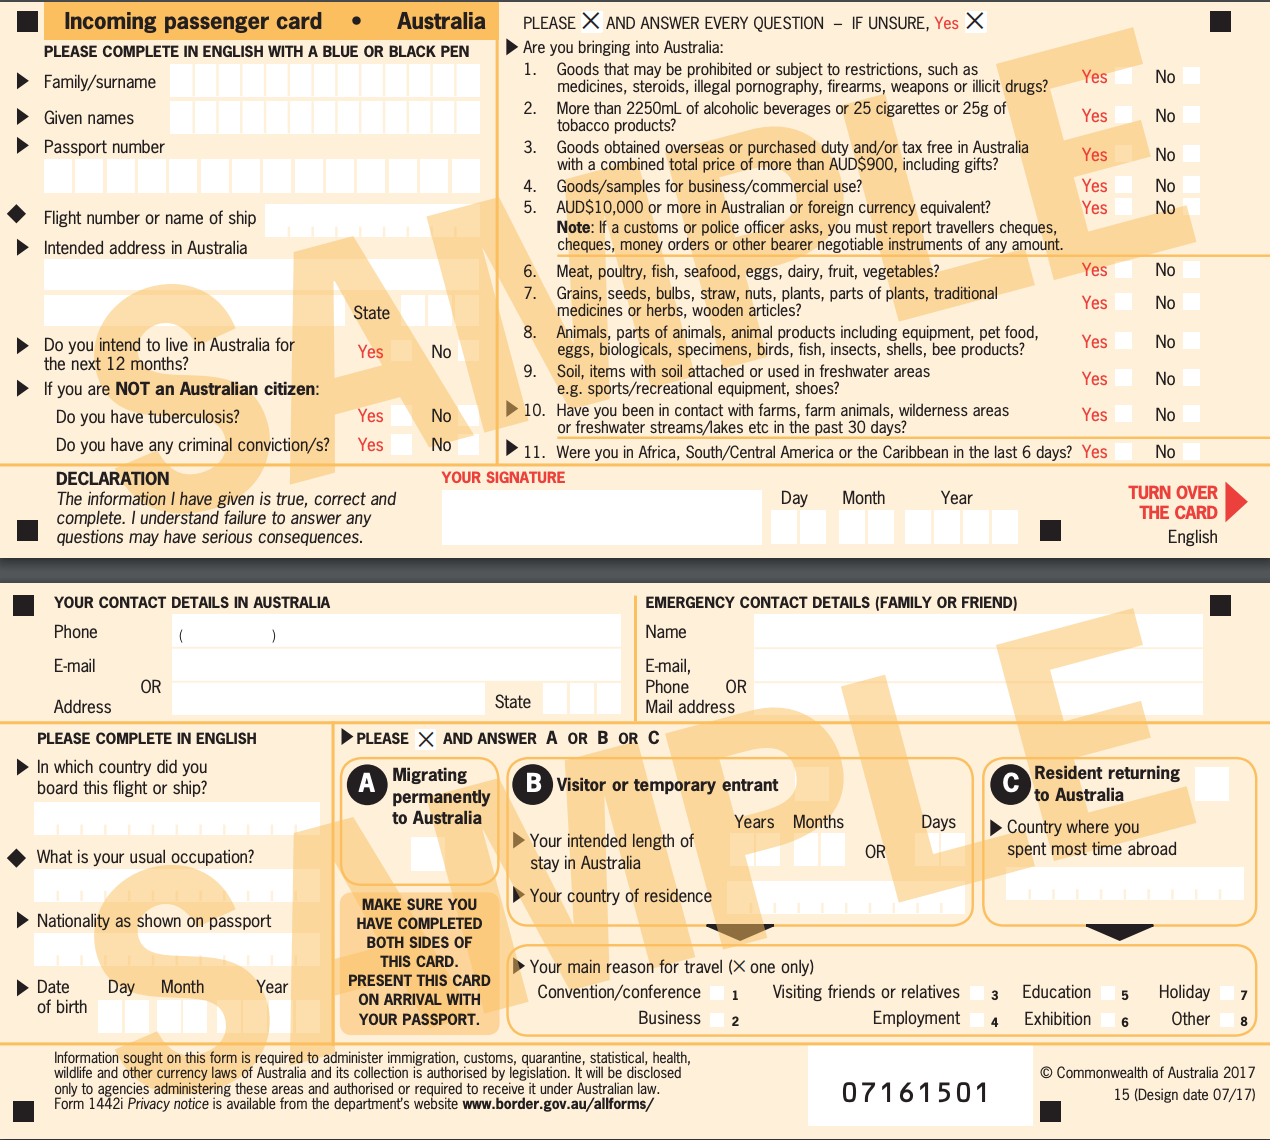 Incoming Passenger Card - IPC - Australia